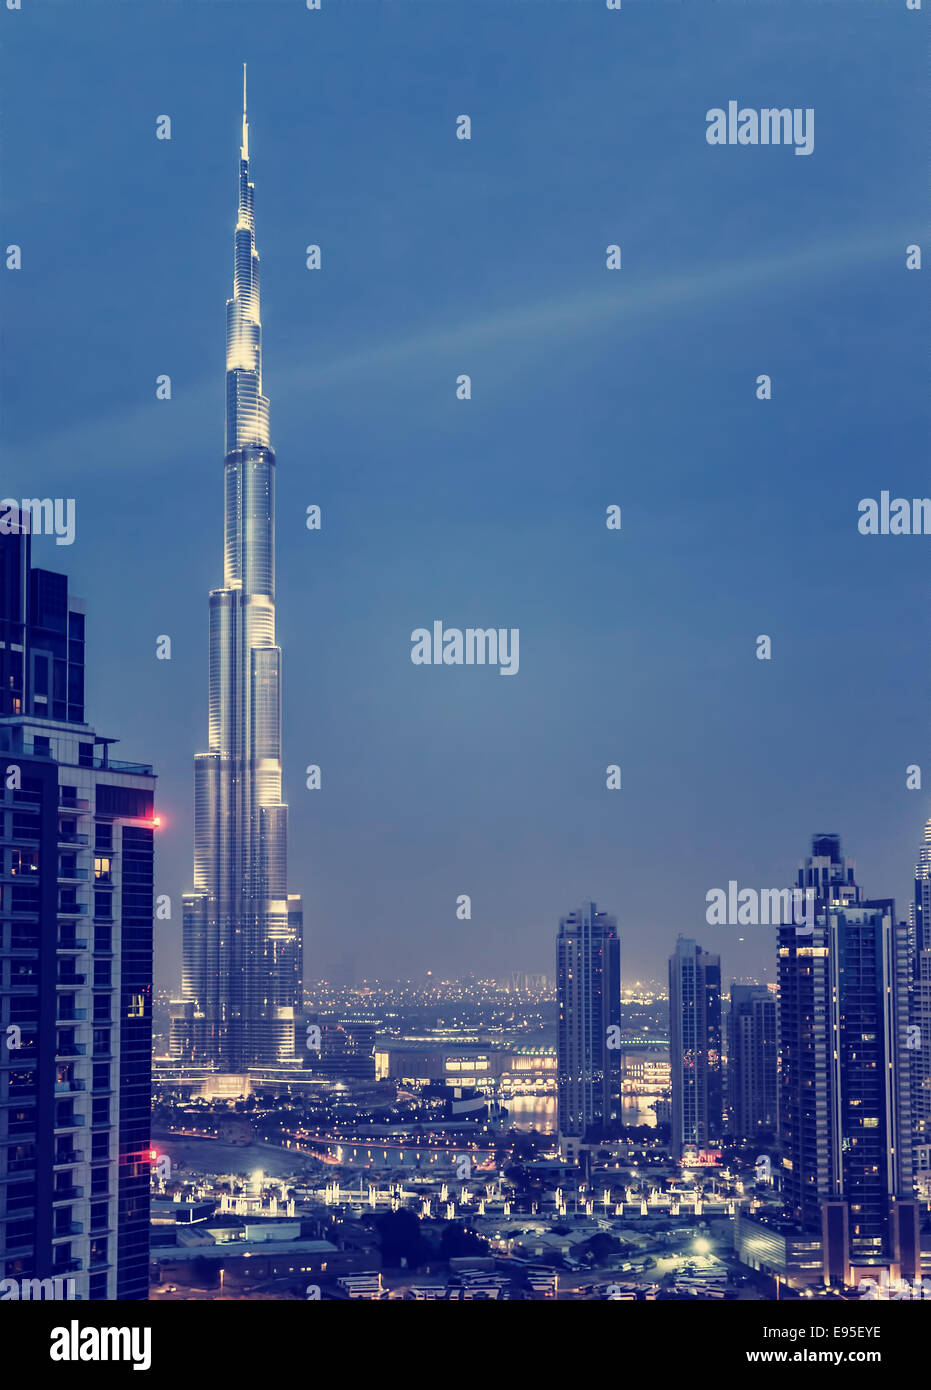 DUBAI, UAE - JANUARY 28: Burj Khalifa, world's tallest tower at 828m, located at Downtown, Burj Khalifa at night Stock Photo